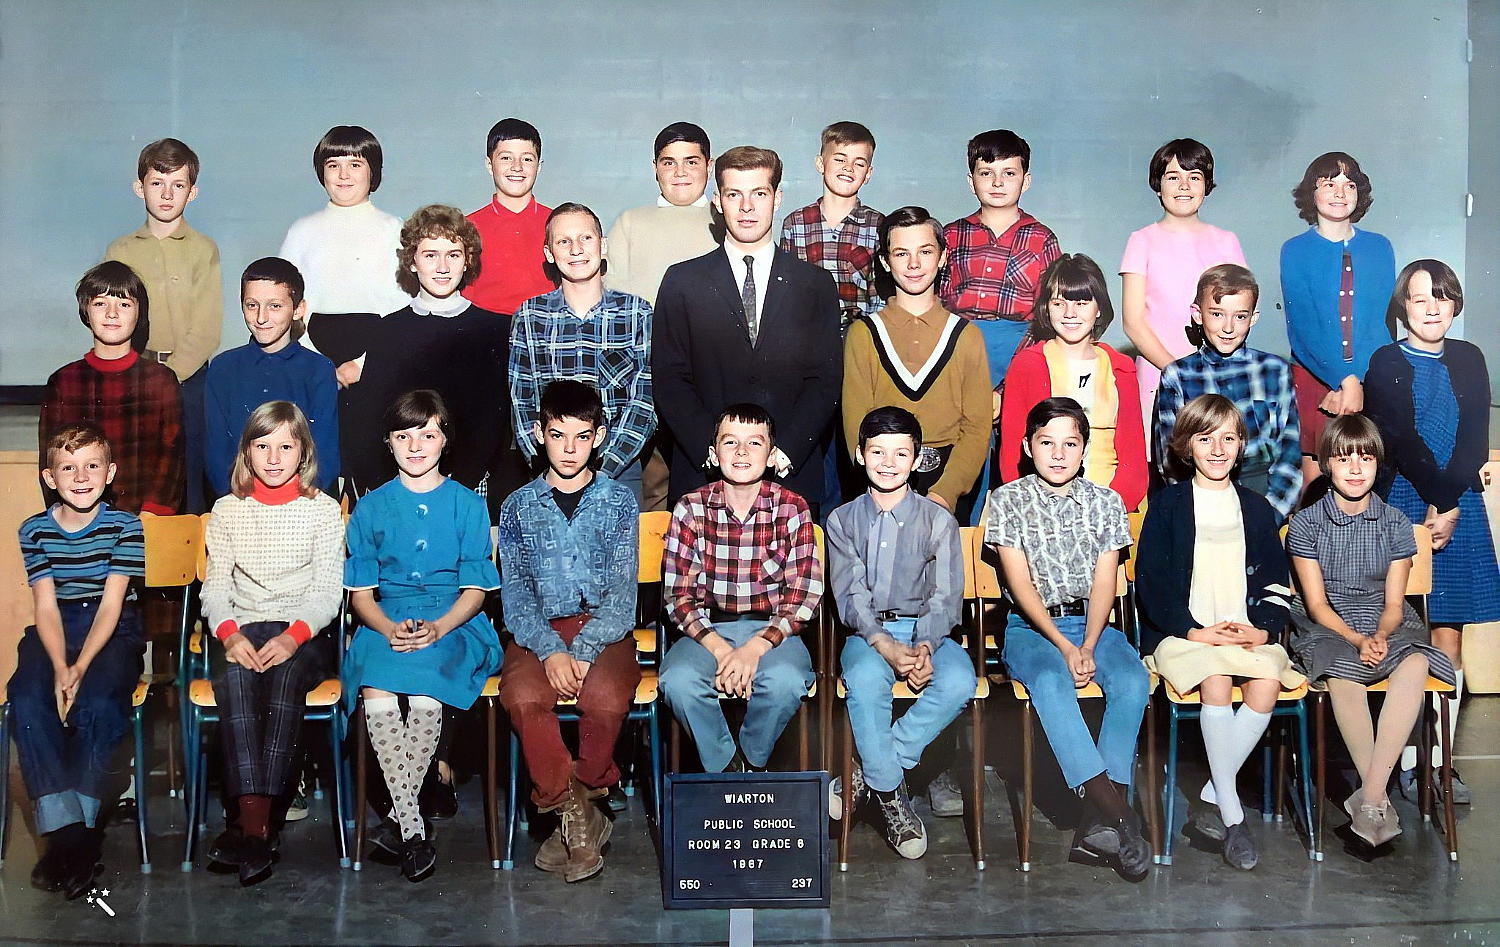 Wiarton Public School, Grade , 1967